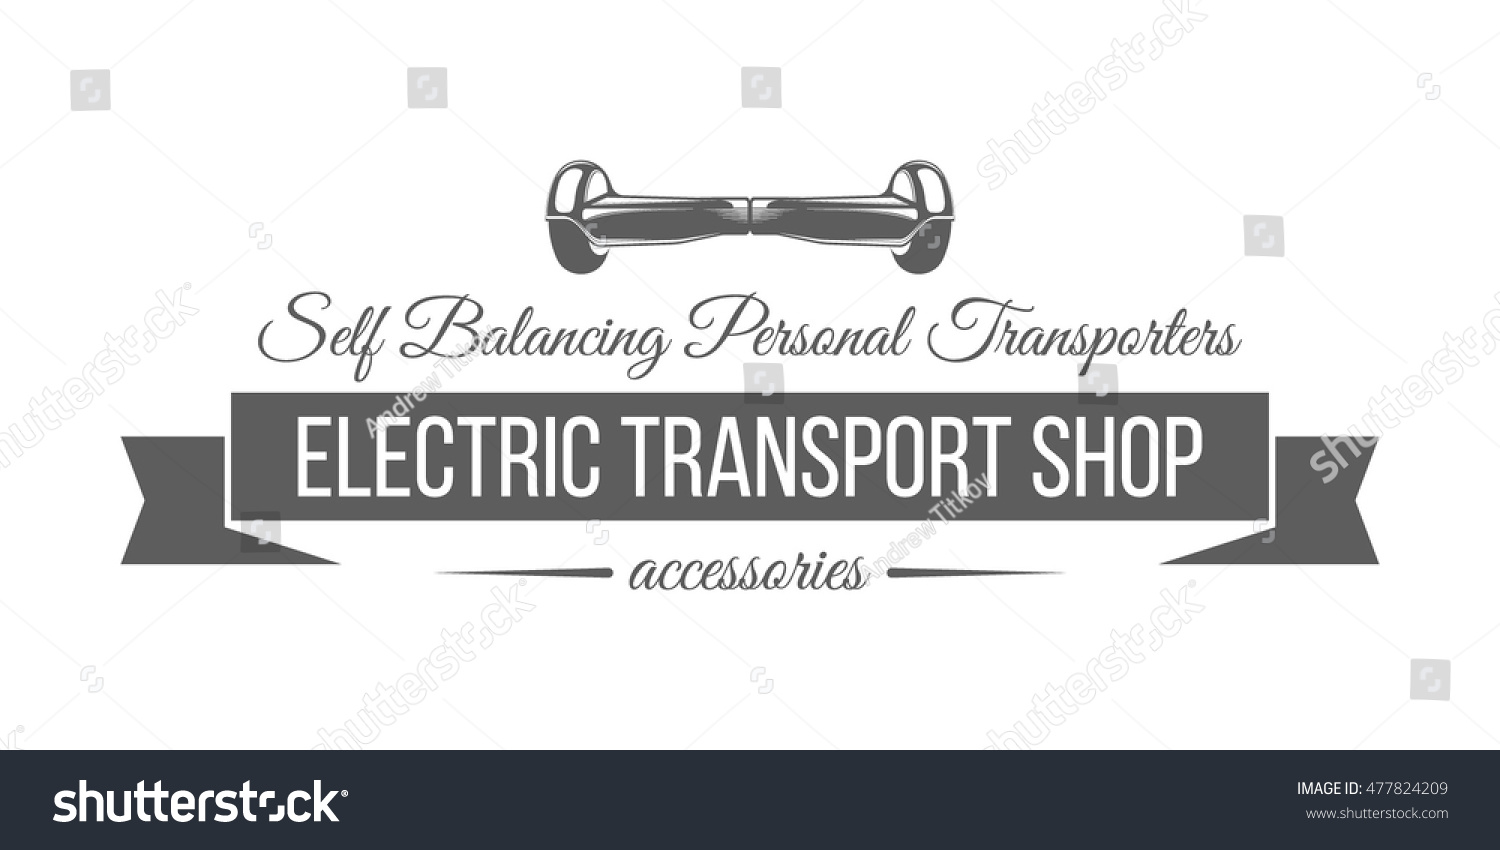 electric transport shop